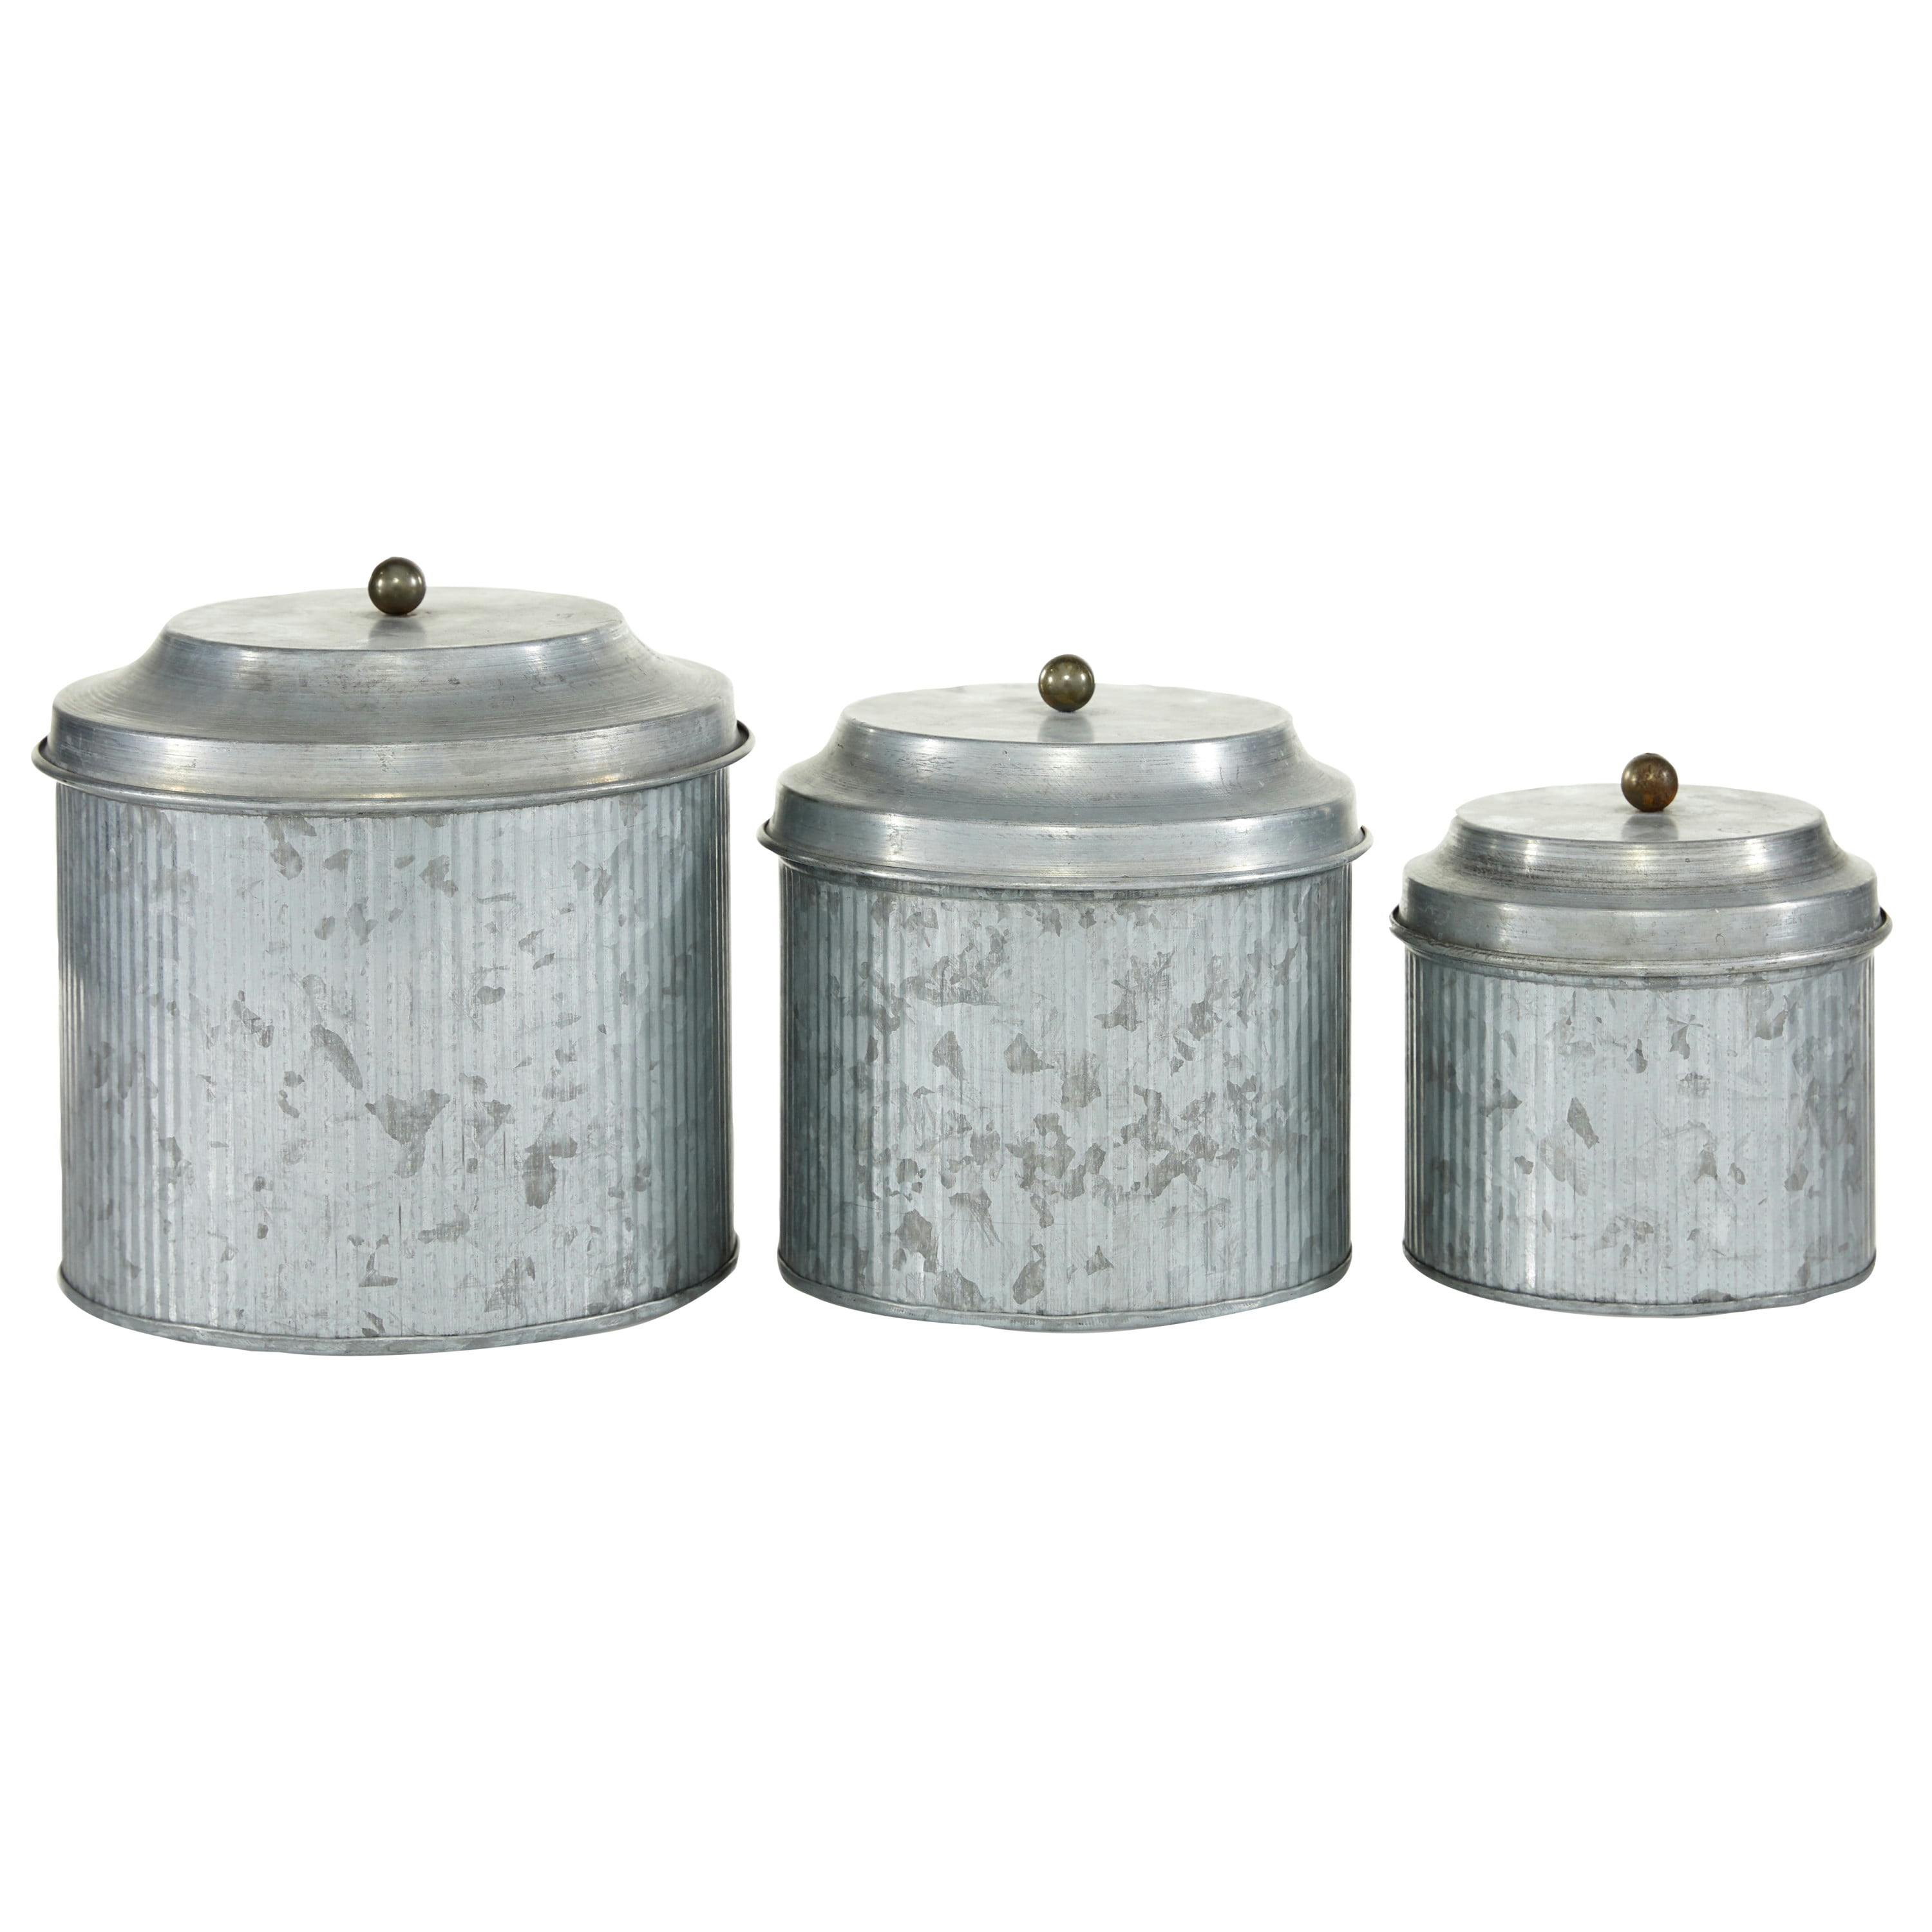 Set of 3 Silver Galvanized Iron Decorative Jars